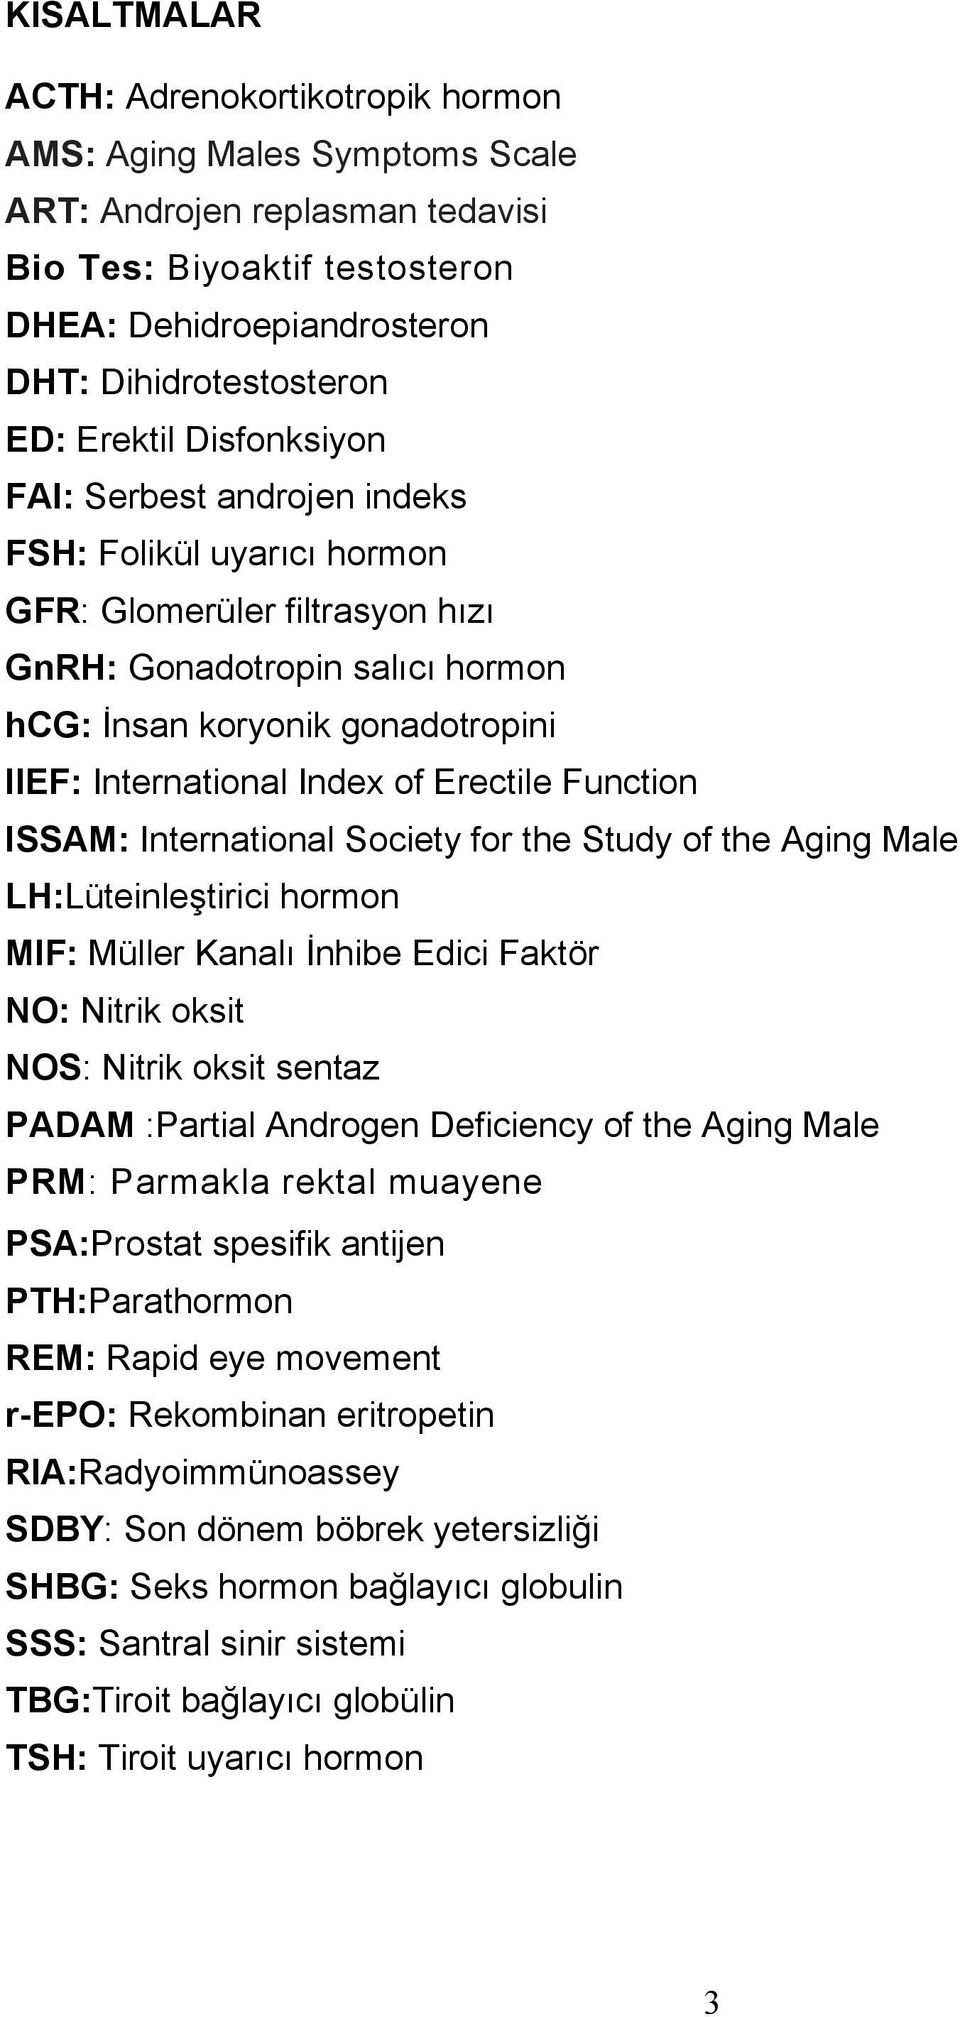 Index of Erectile Function ISSAM: International Society for the Study of the Aging Male LH:Lüteinleştirici hormon MIF: Müller Kanalı İnhibe Edici Faktör NO: Nitrik oksit NOS: Nitrik oksit sentaz